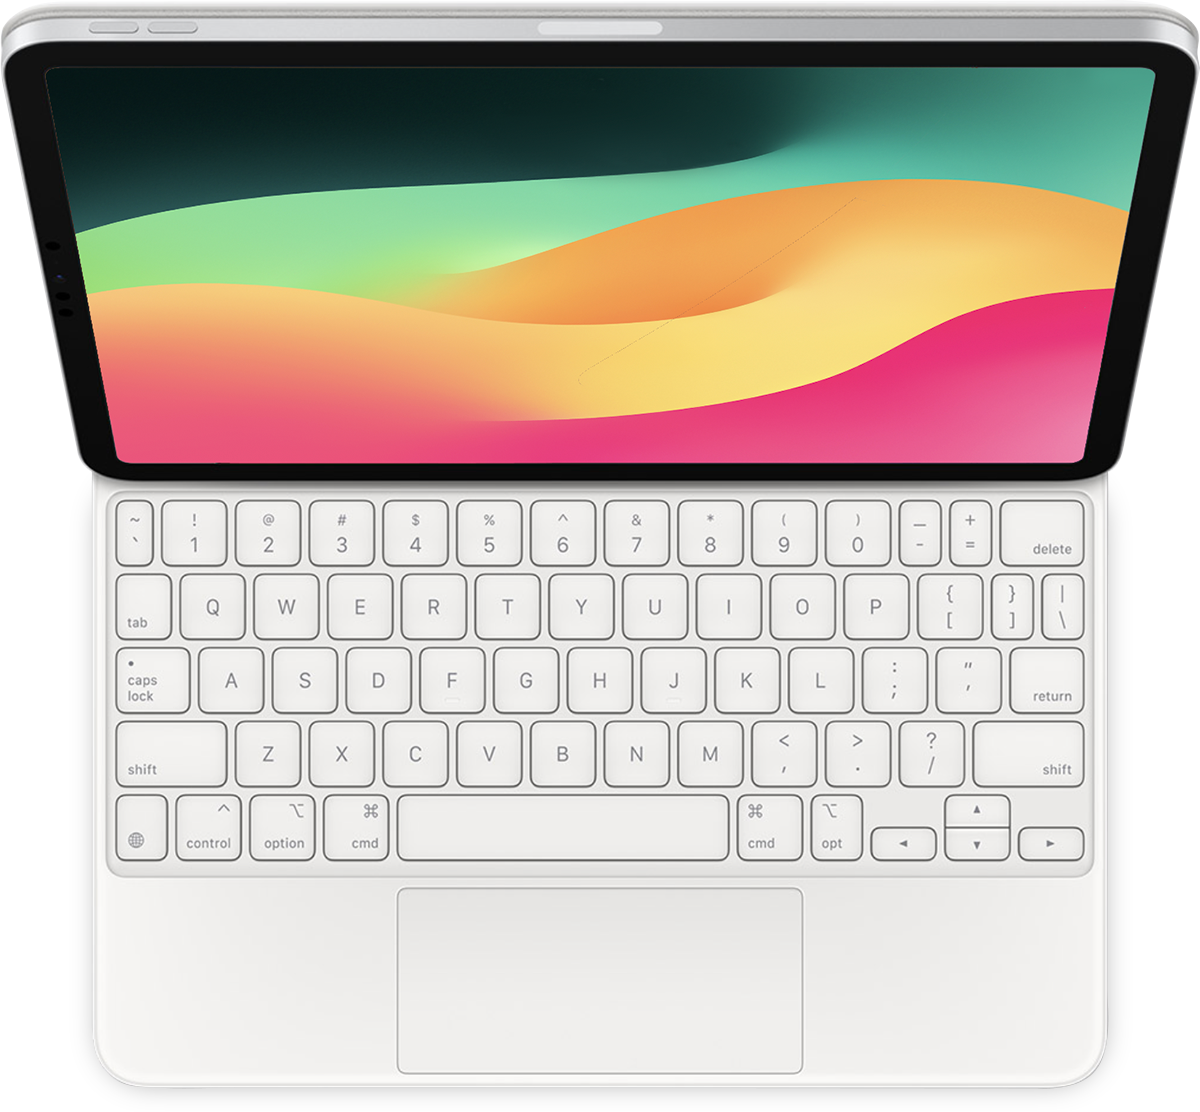 Imagem do iPad com Magic Keyboard